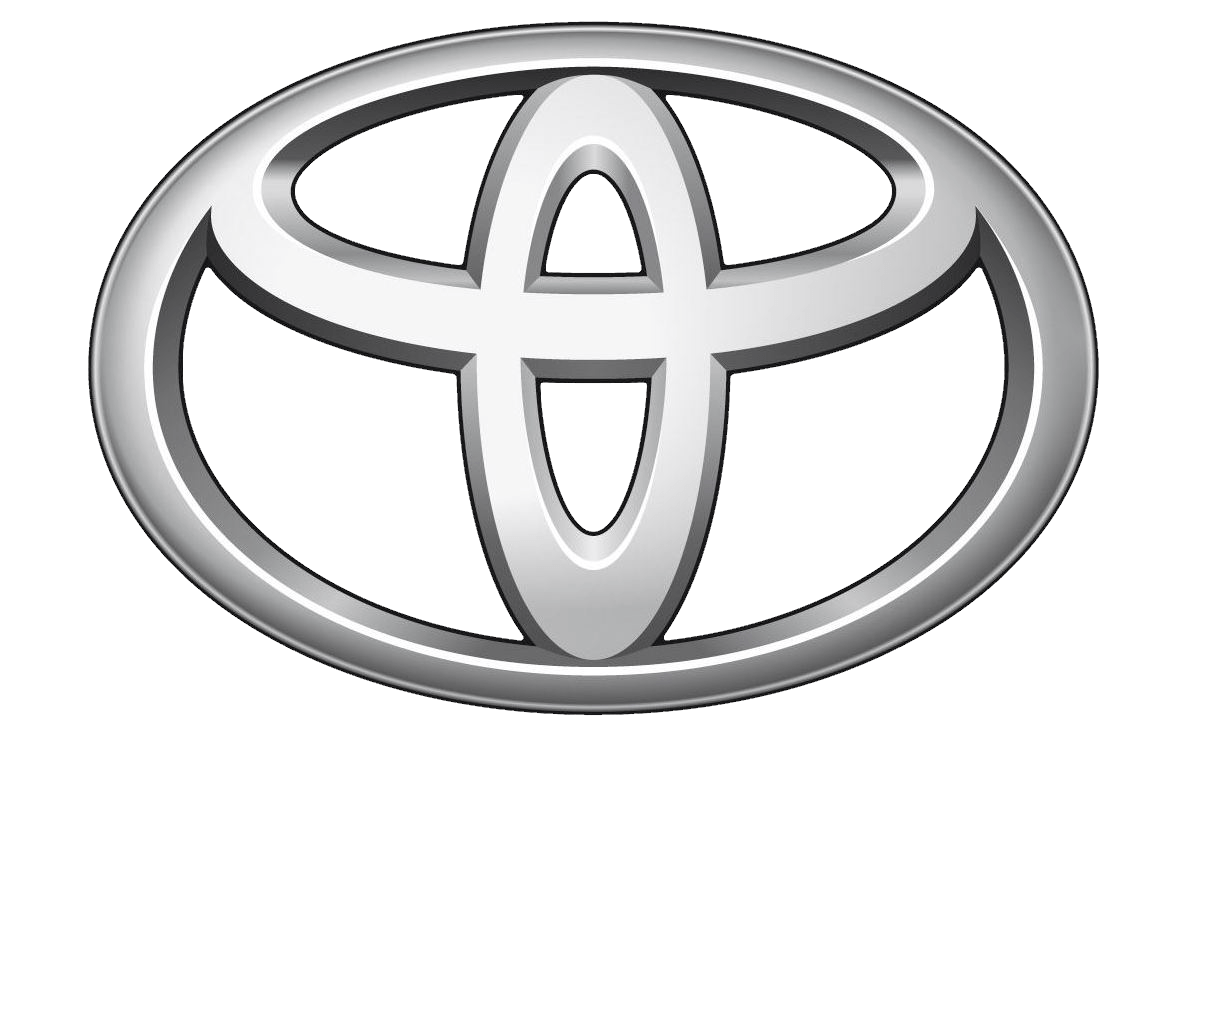 Del Toyota Logo - Toyota is a car company